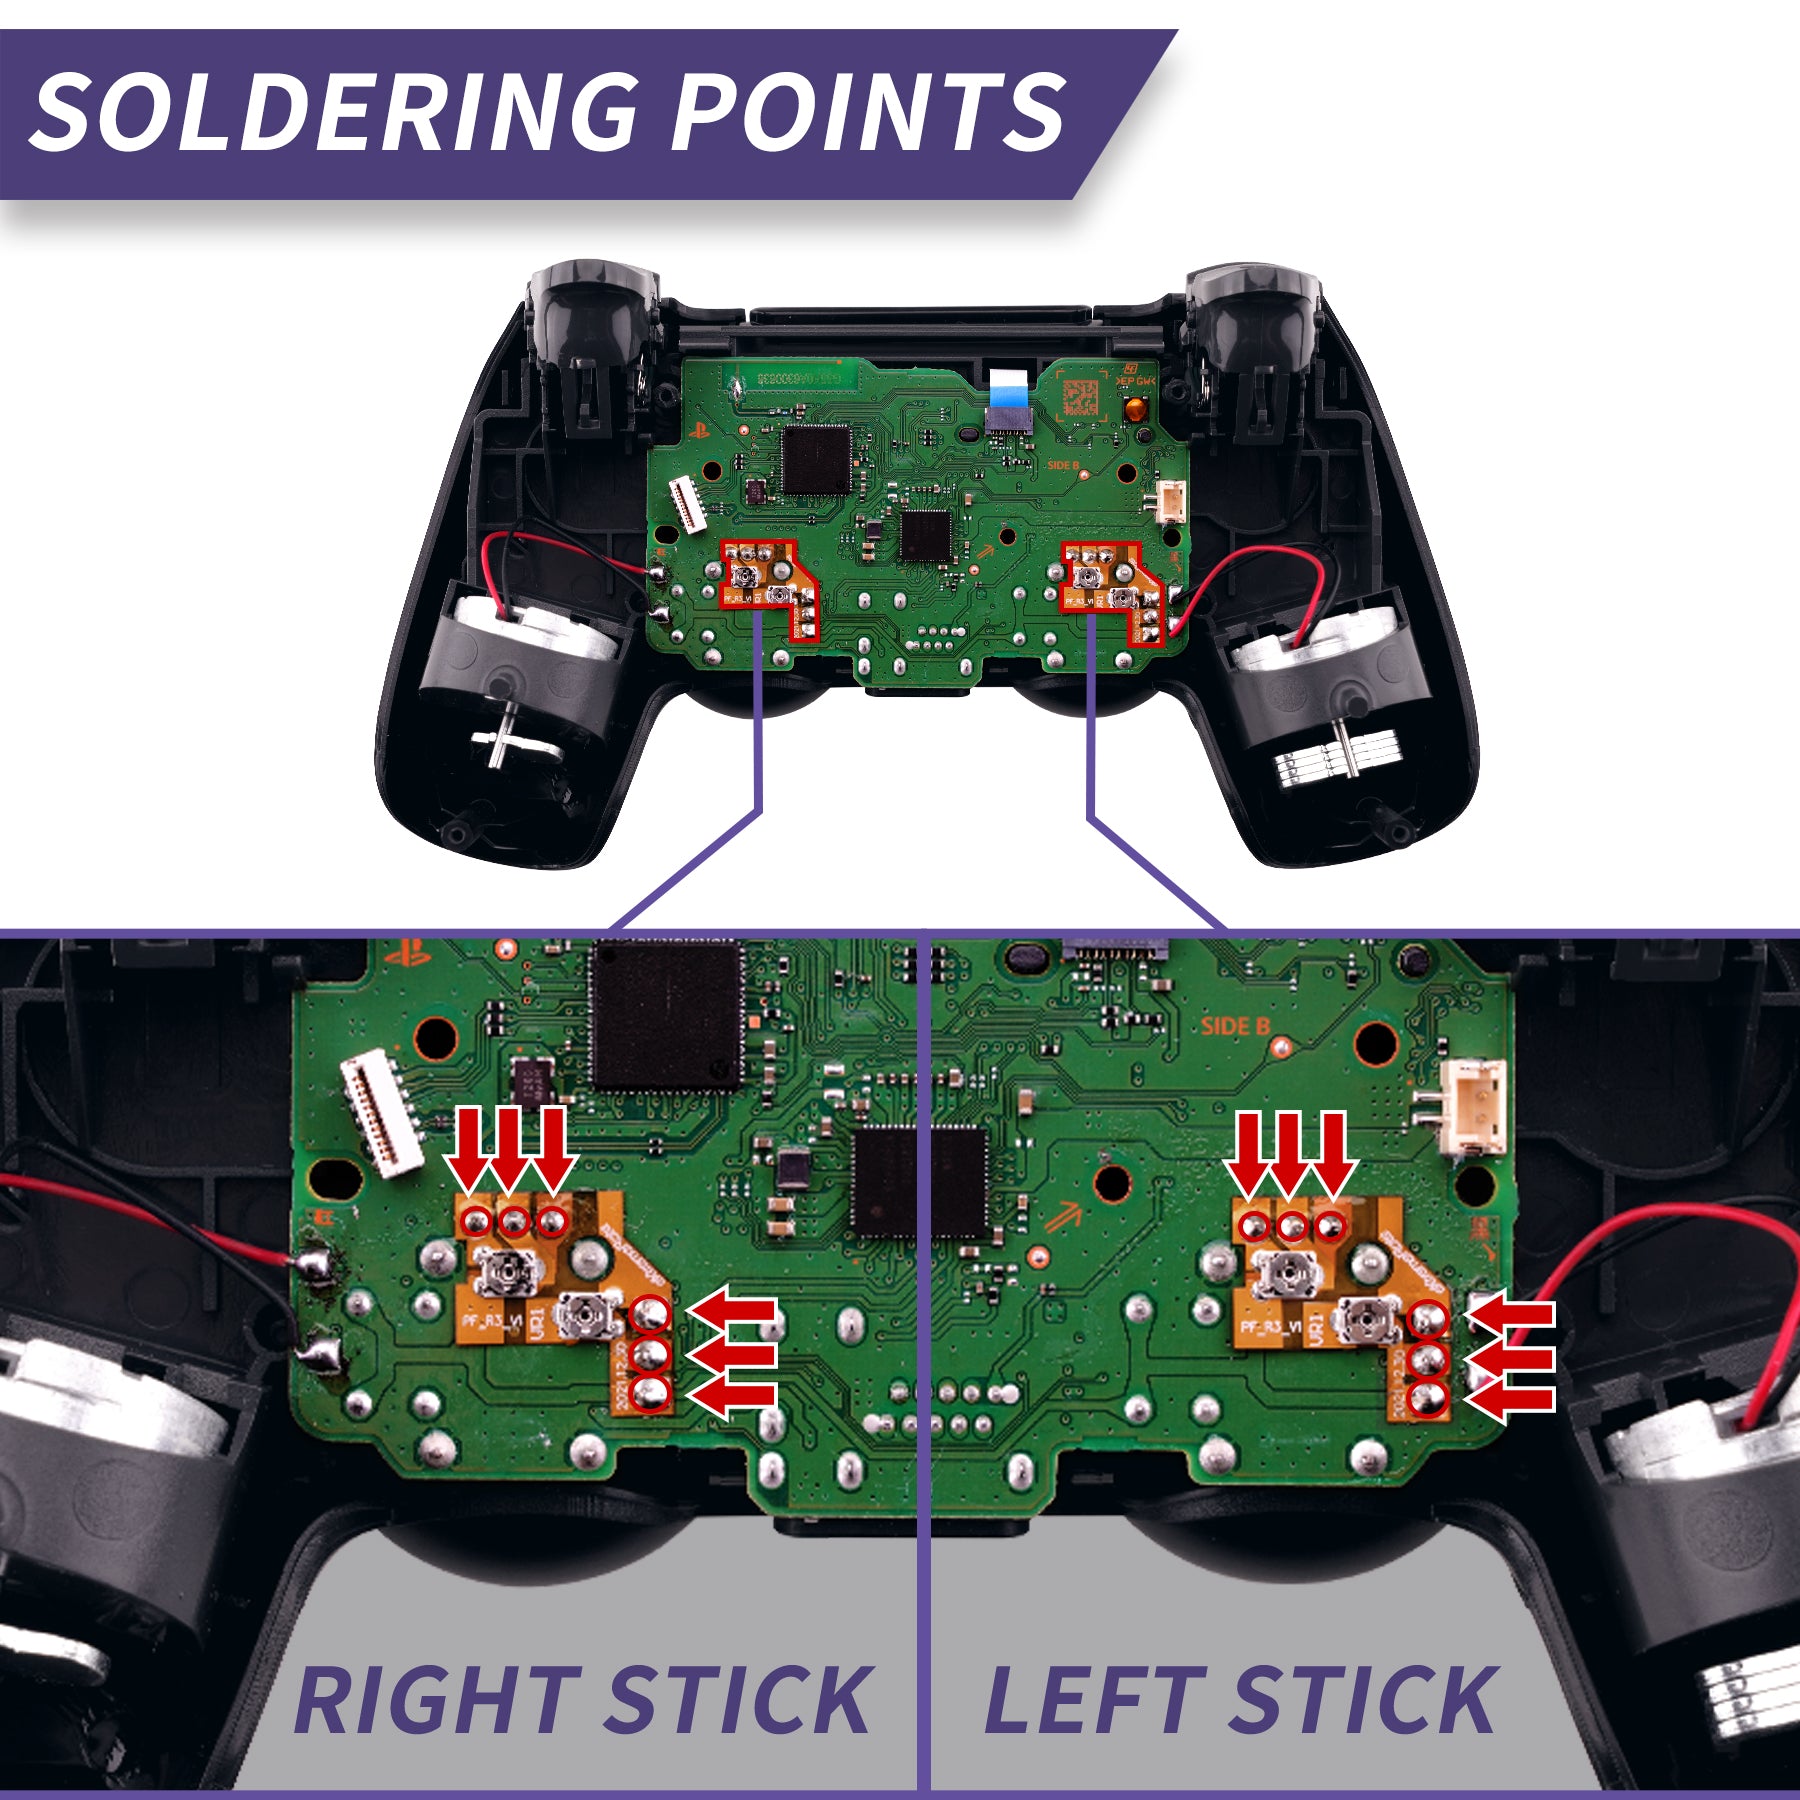 PS4 Controller repair [joystick replacement] 